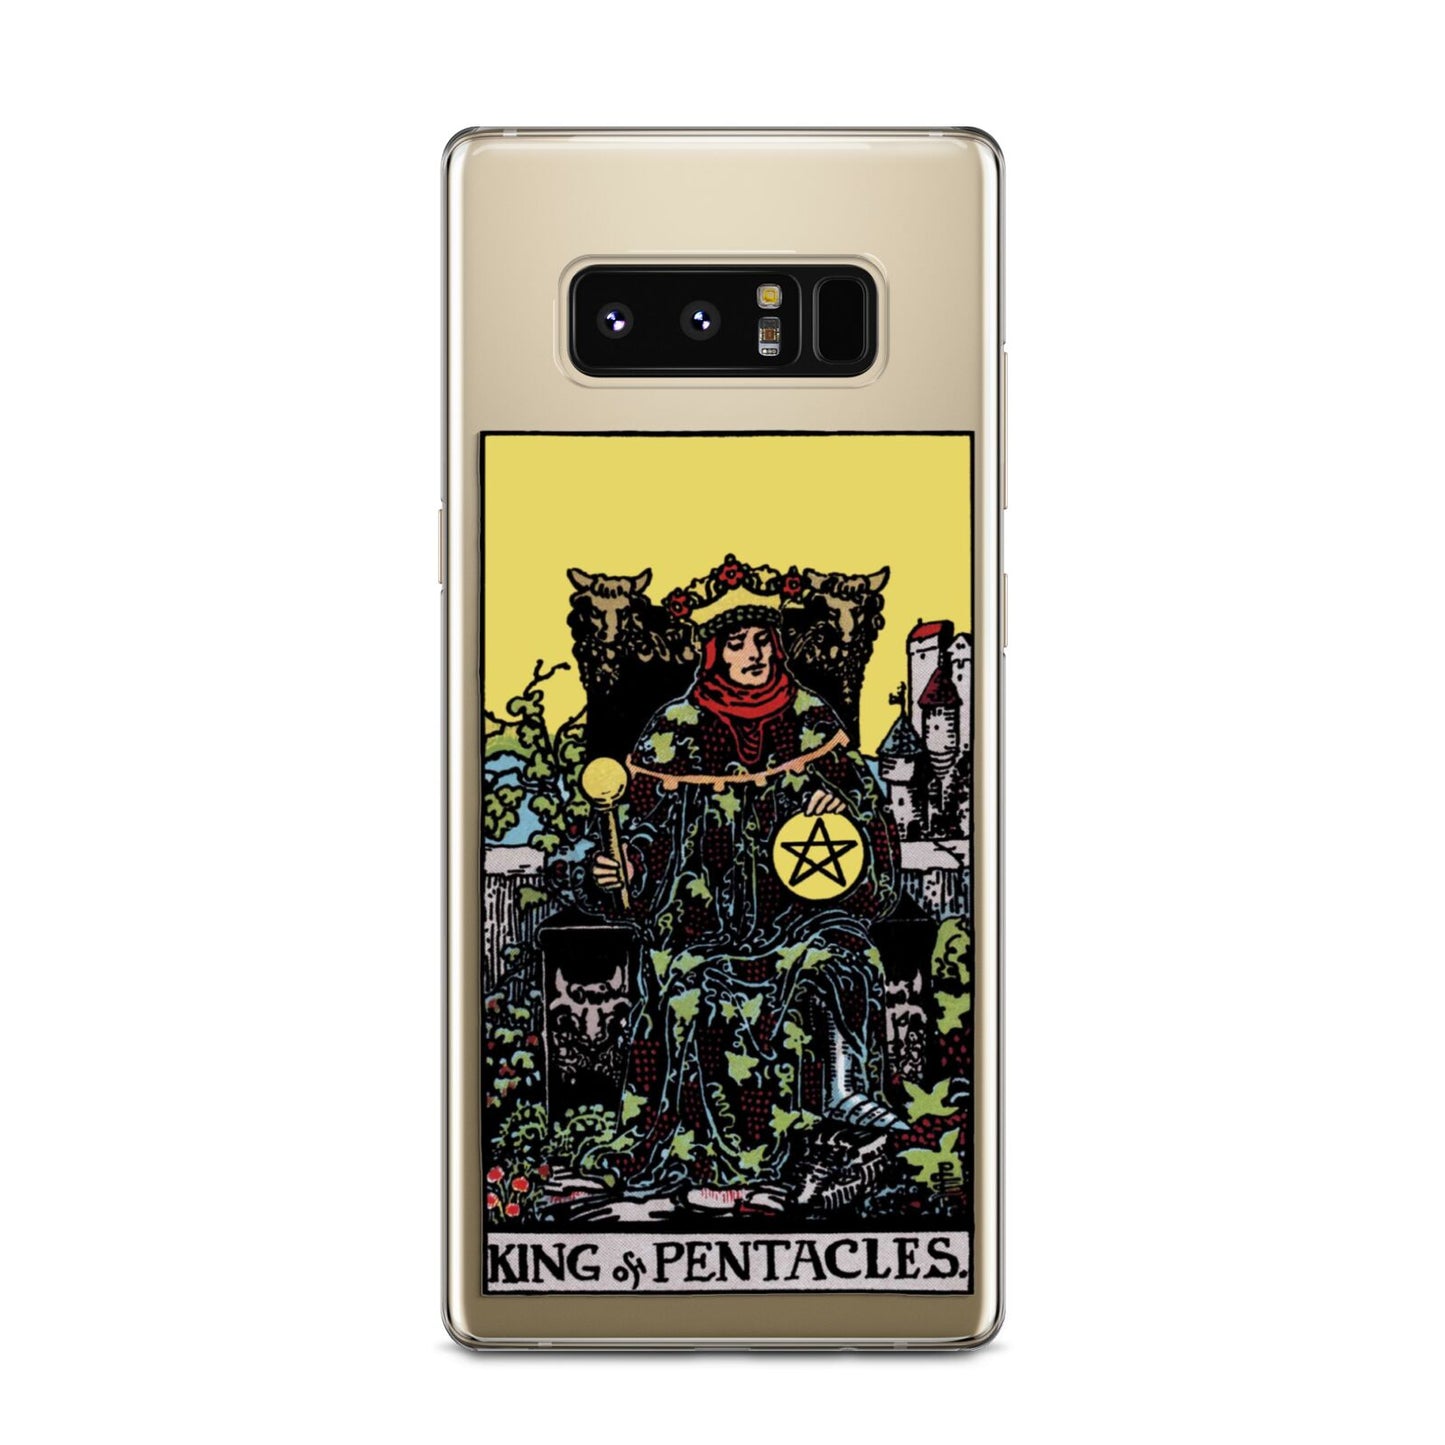 King of Pentacles Tarot Card Samsung Galaxy Note 8 Case